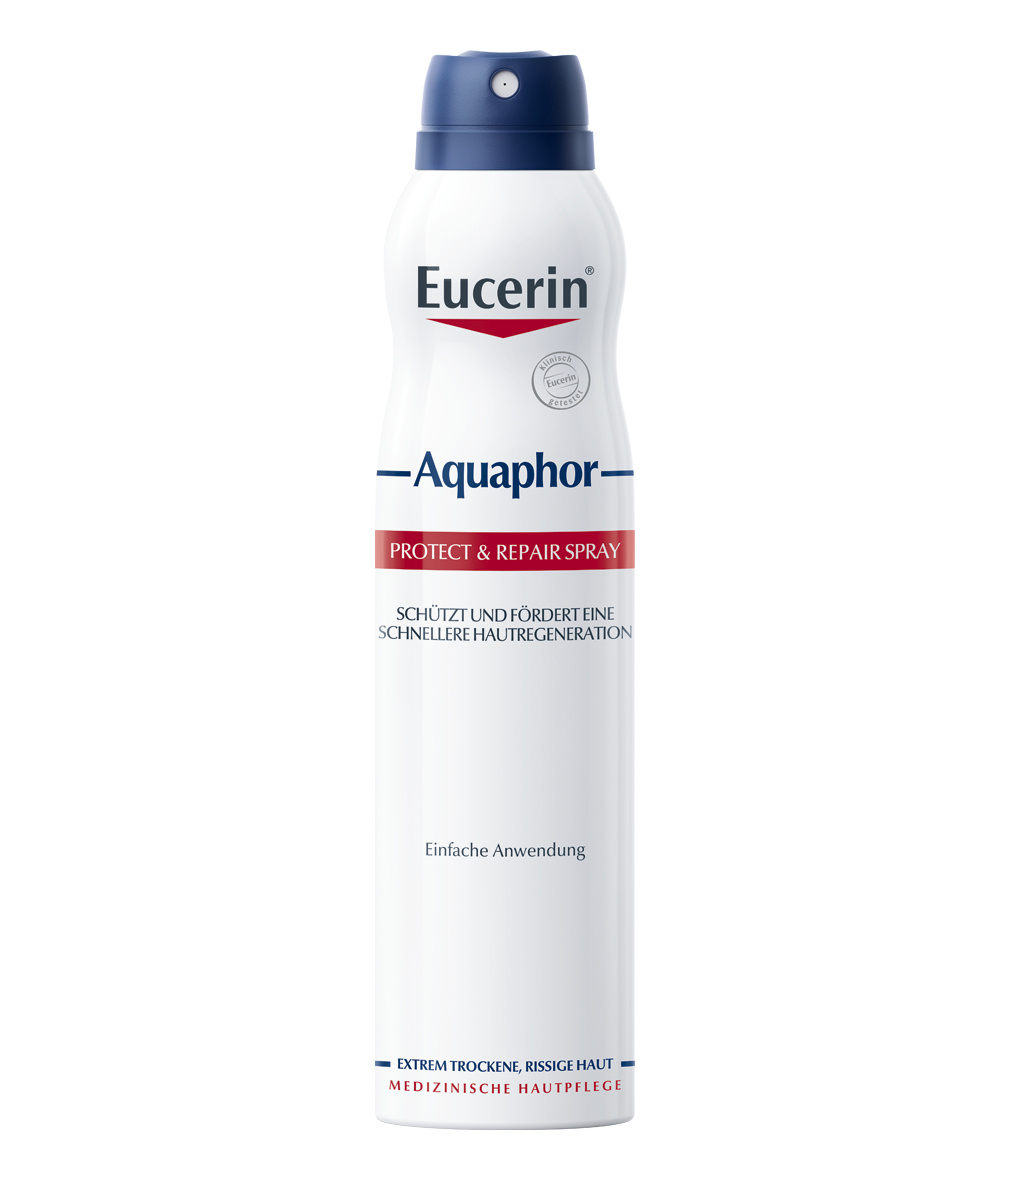 Eucerin Aquaphor Protect & Repair Spray (250 ml)